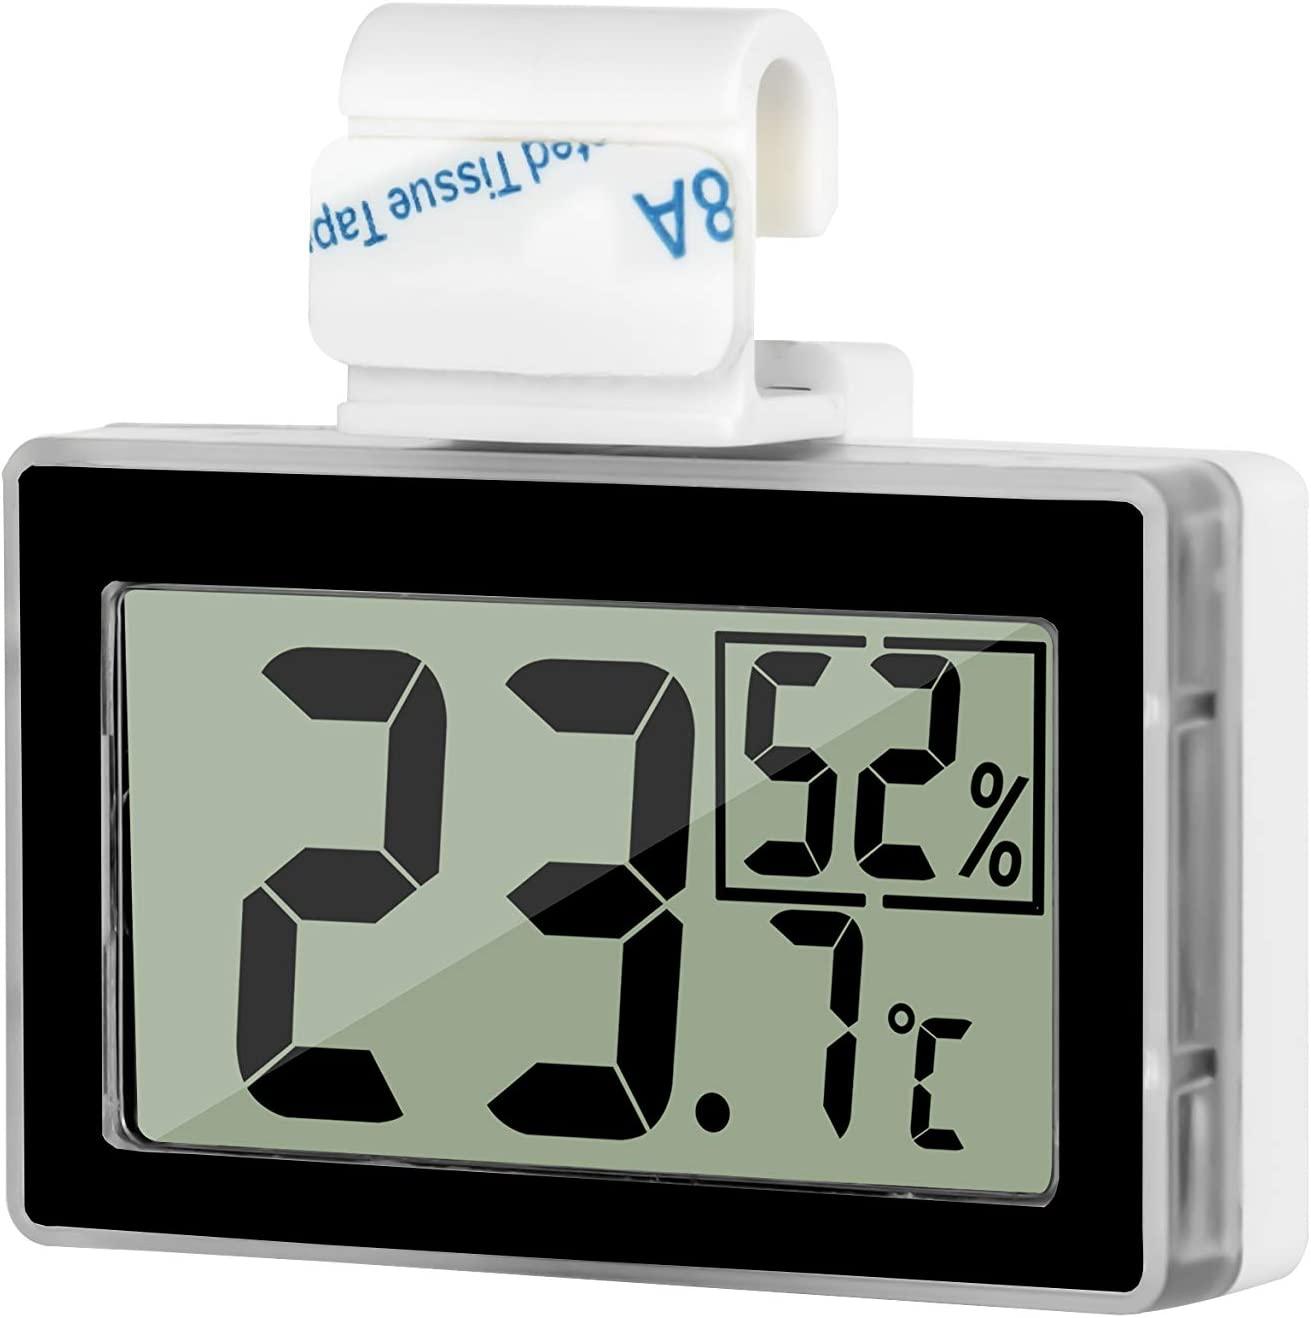 Reptile Thermometer Hygrometer LCD Digital Humidity Gauge Digital